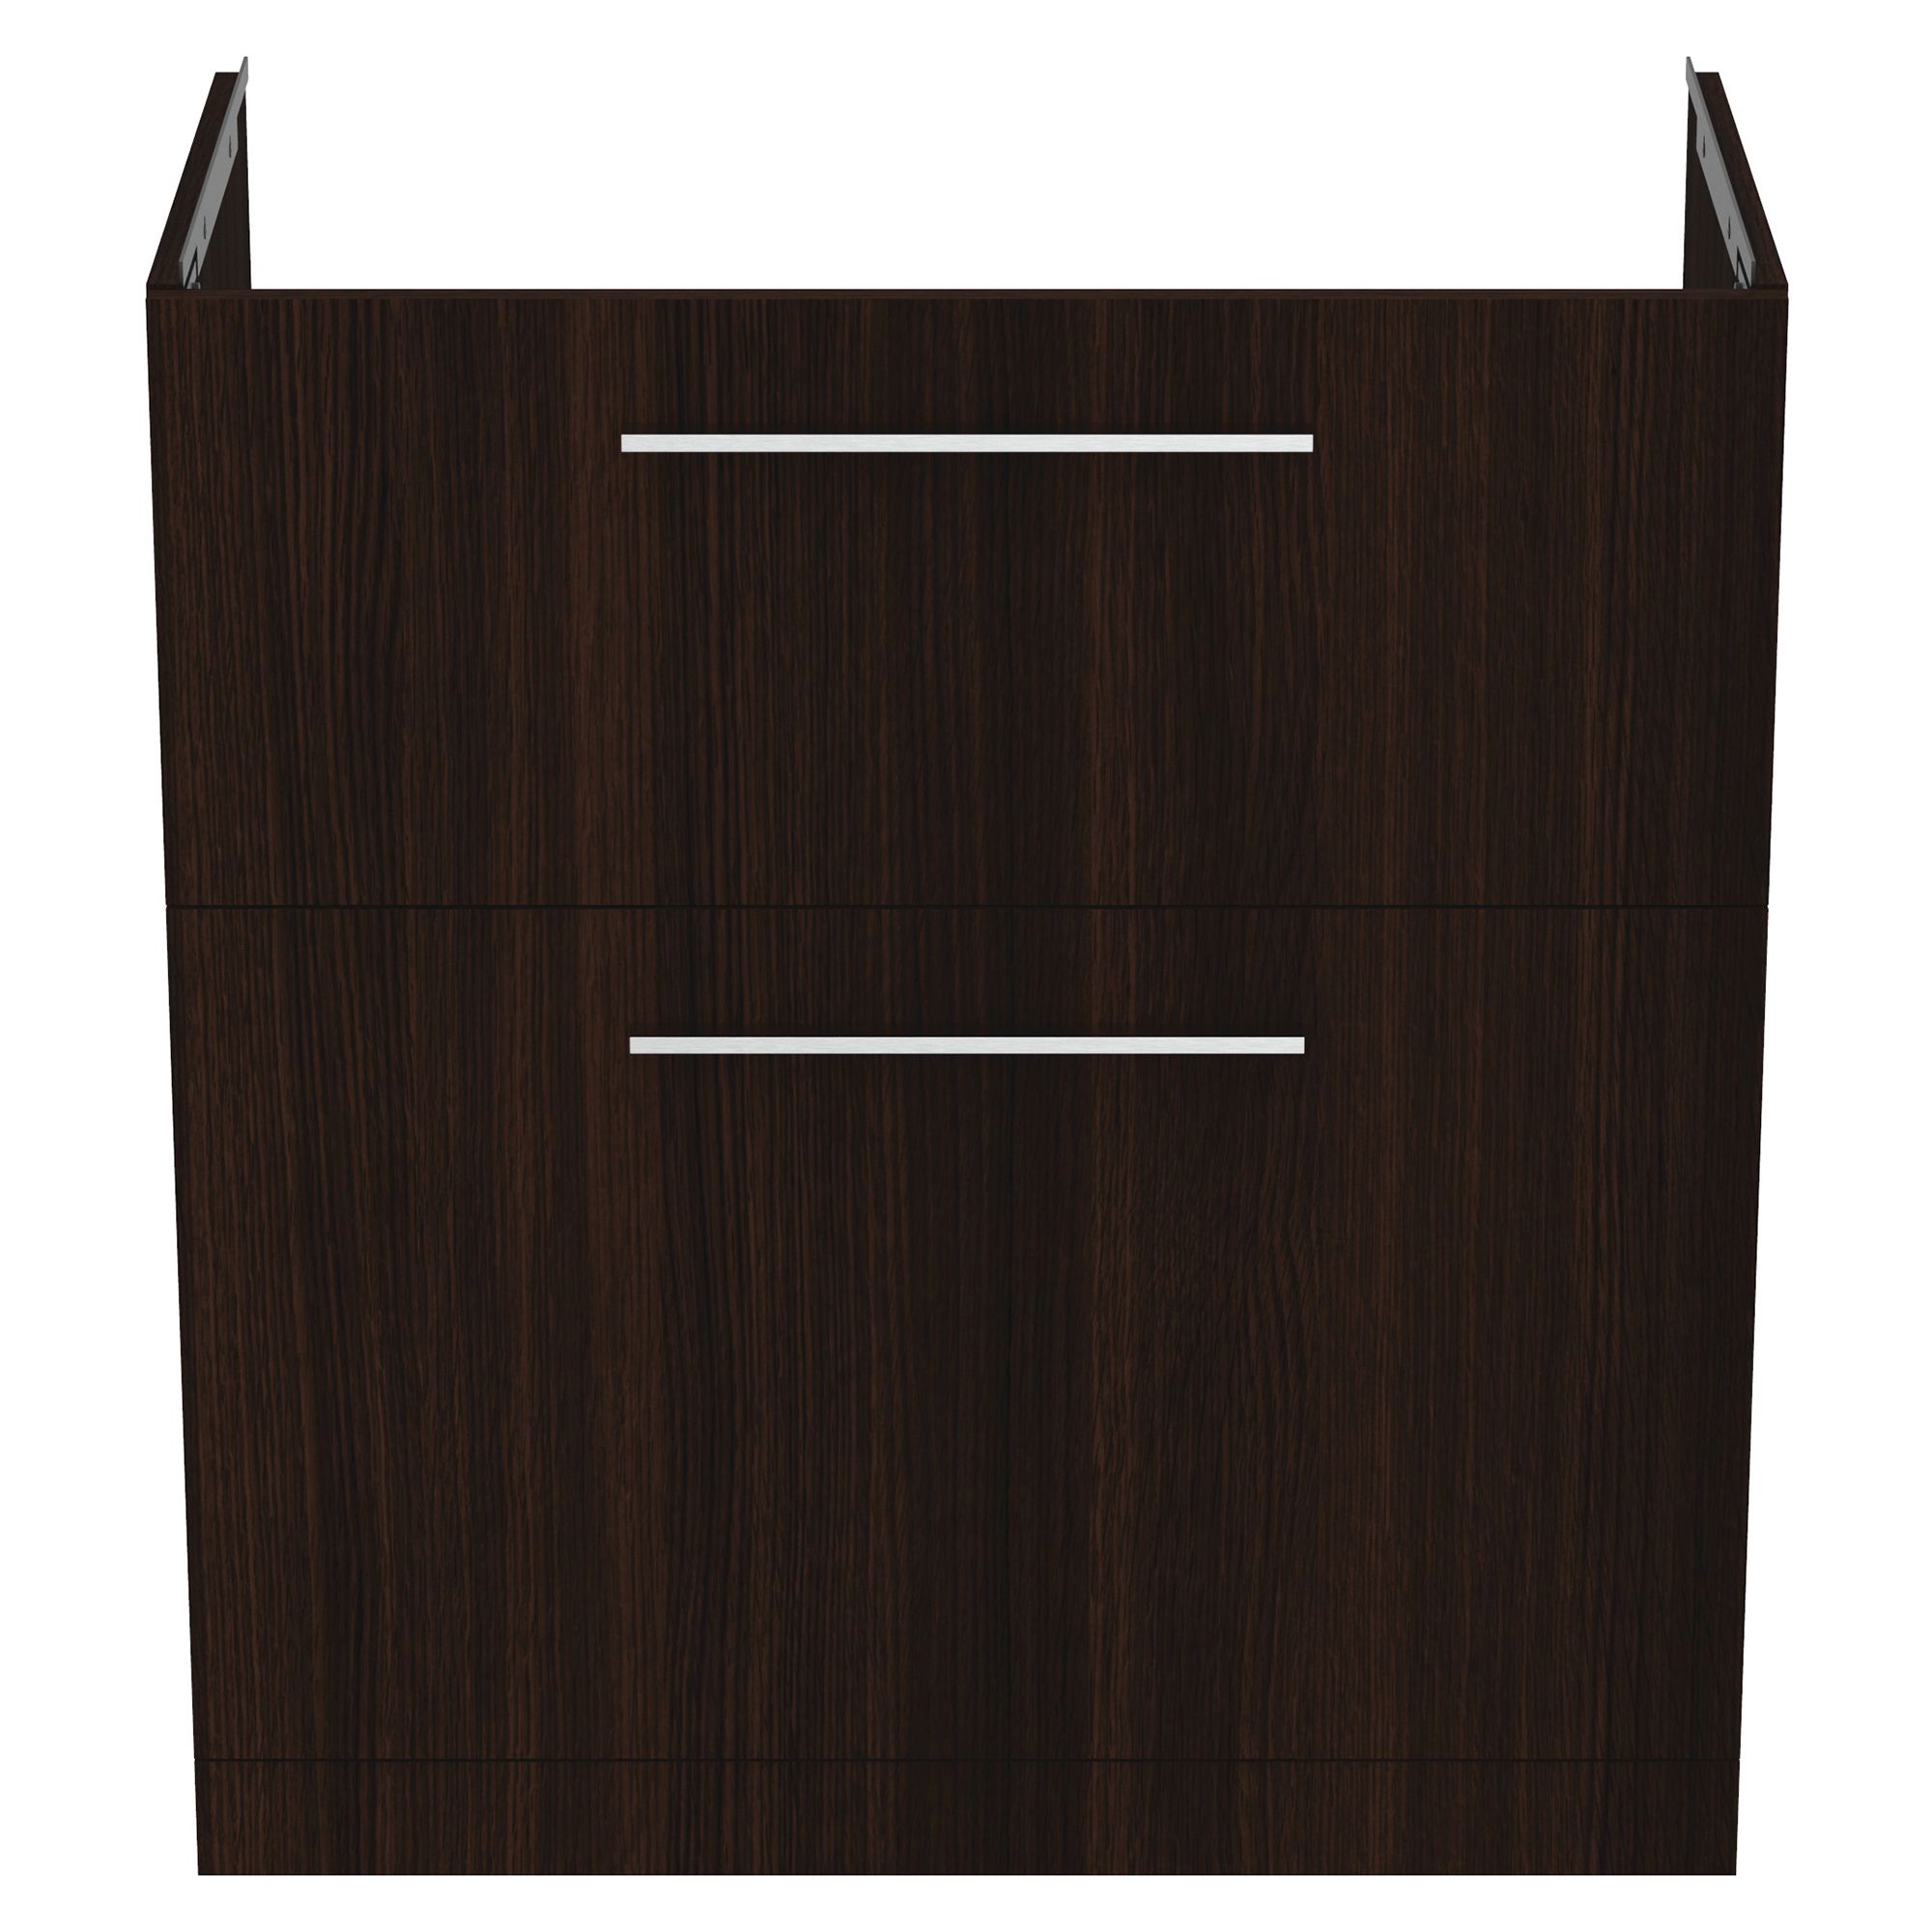 Ideal Standard i.life A Standard Coffee Brown Oak effect Freestanding Bathroom Vanity unit (H)85.3cm (W)80cm